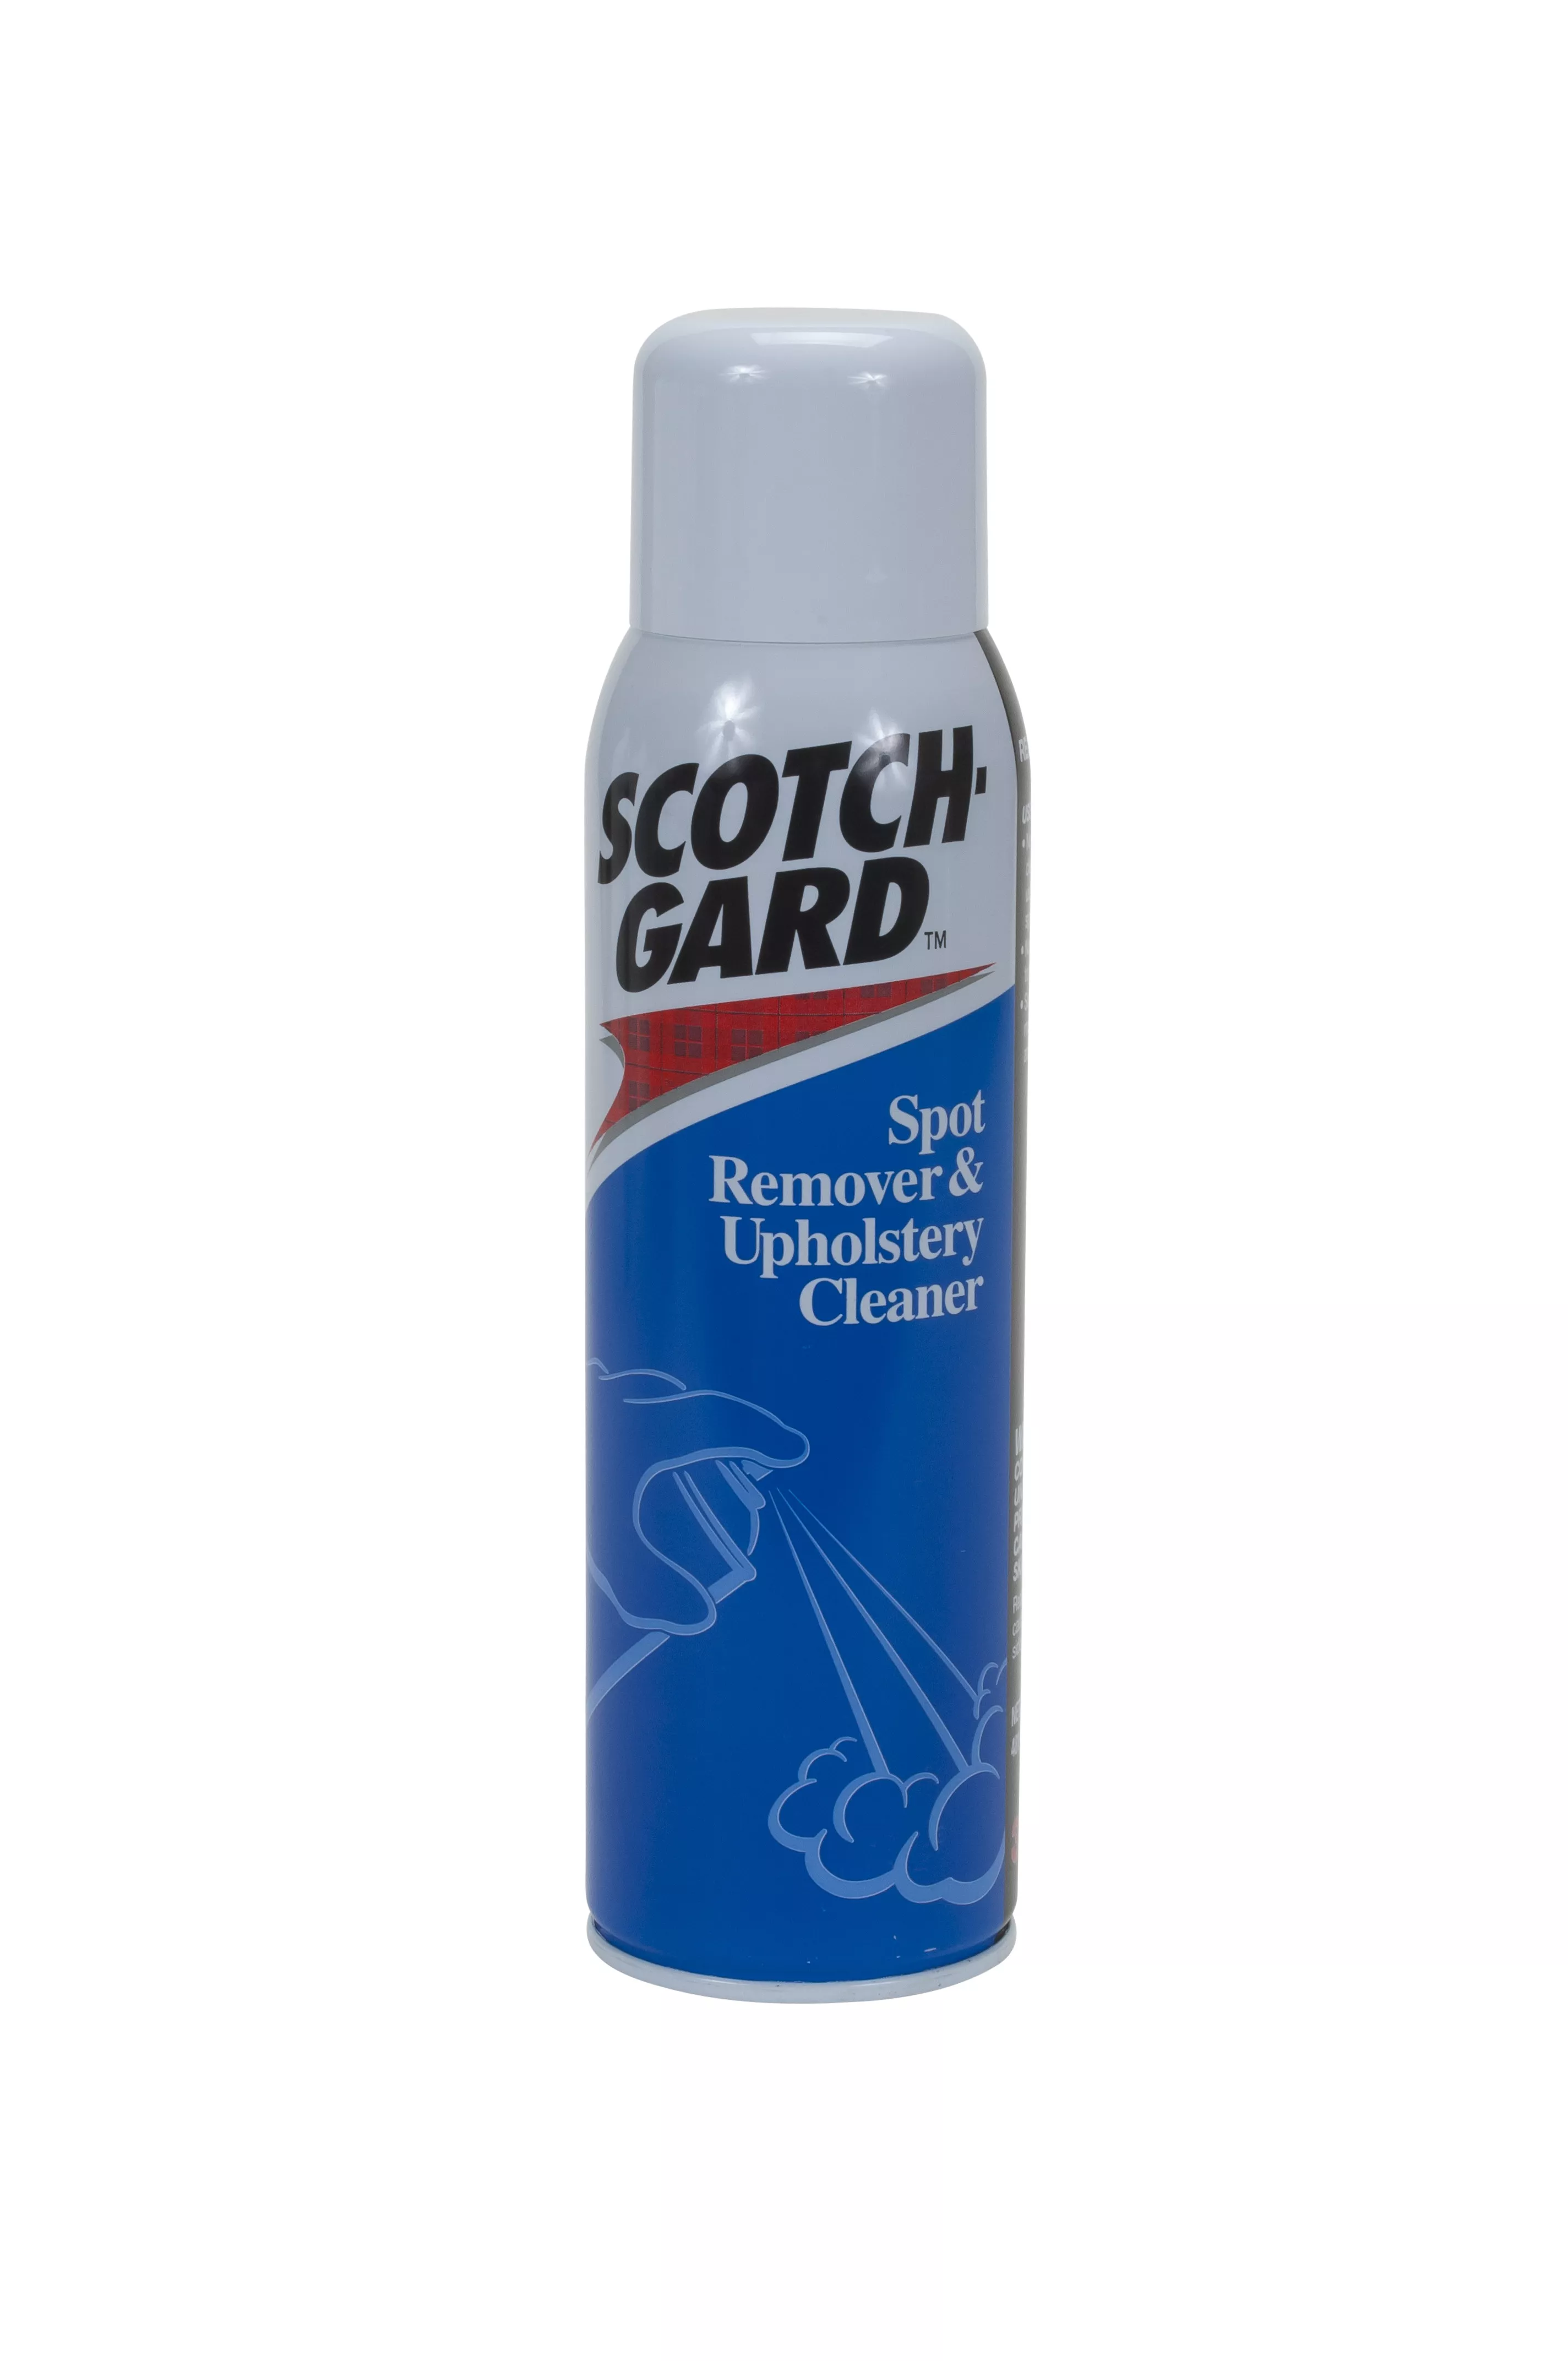 3M™ Scotchgard™ Spot Remover & Upholstery Cleaner, 17 oz Aerosol,
12/Case